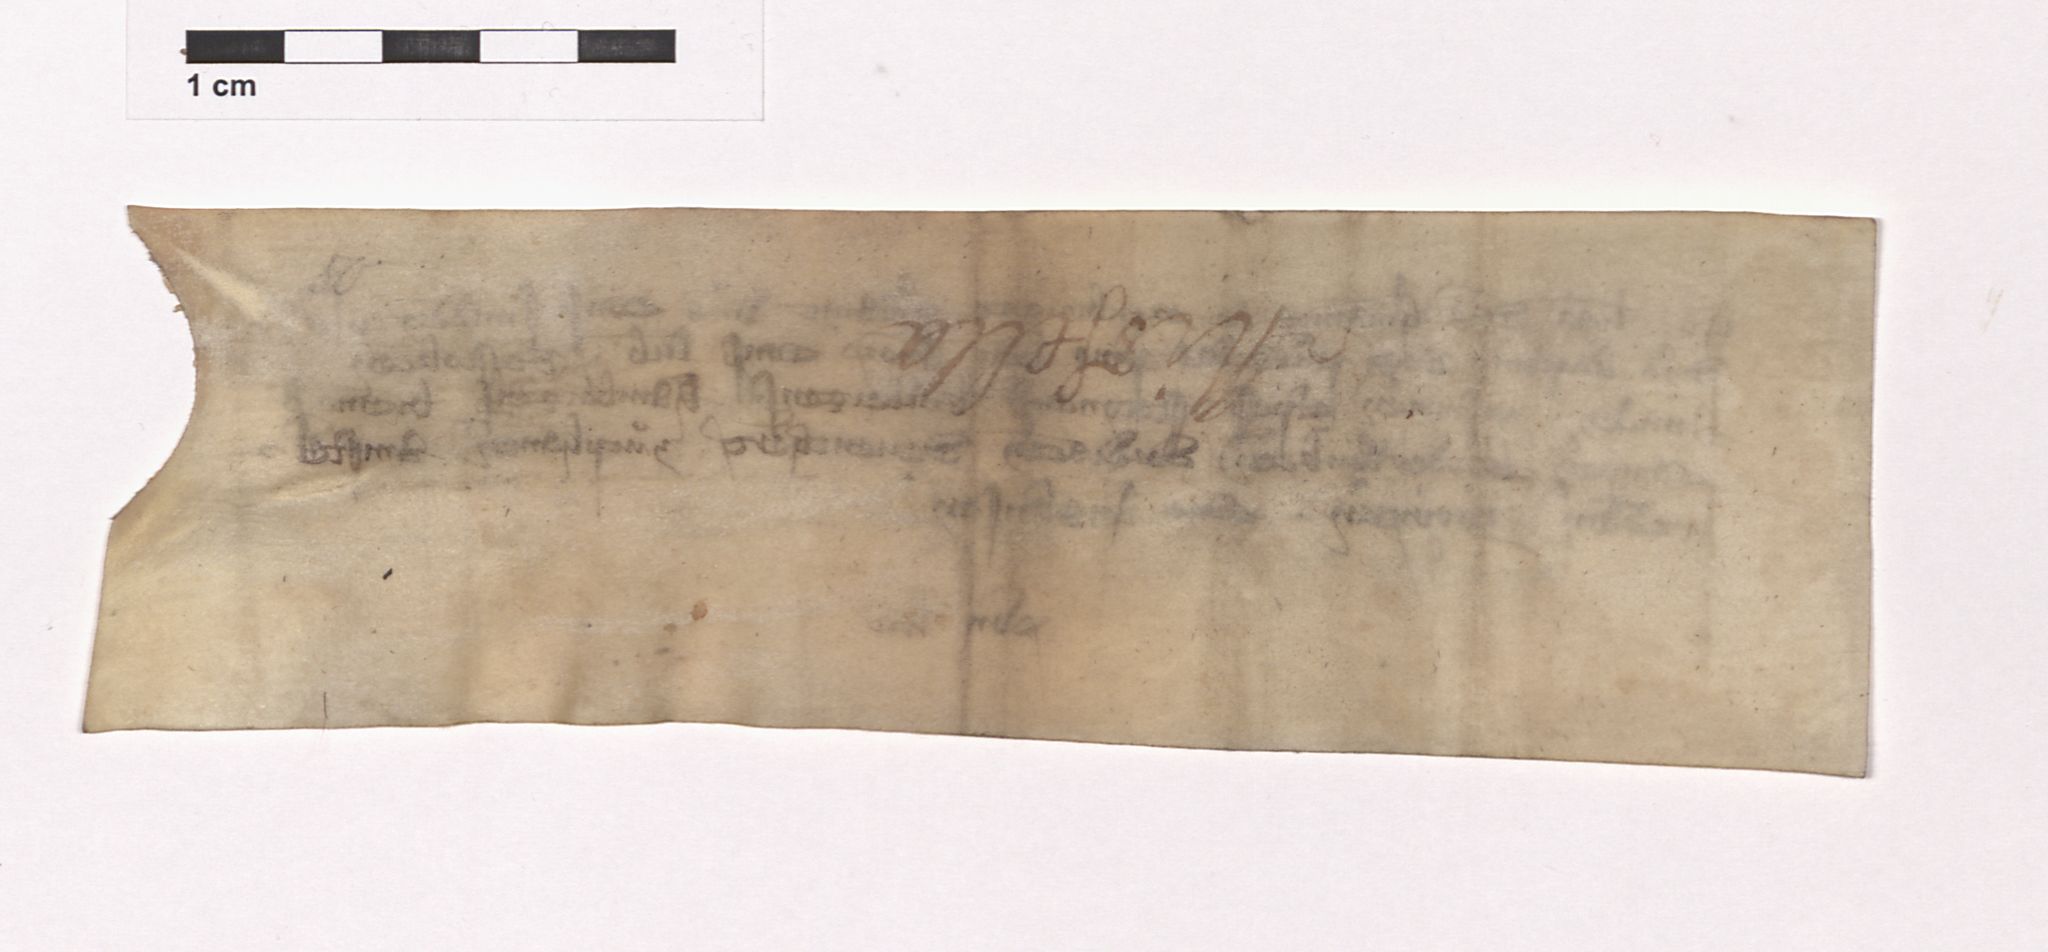 07.1 Urkunden, 3 Auswärtige Beziehungen (Externa), AHL/-/21: Norwegen (Norvagica); Kontor zu Bergen, 1247-1747, s. 442